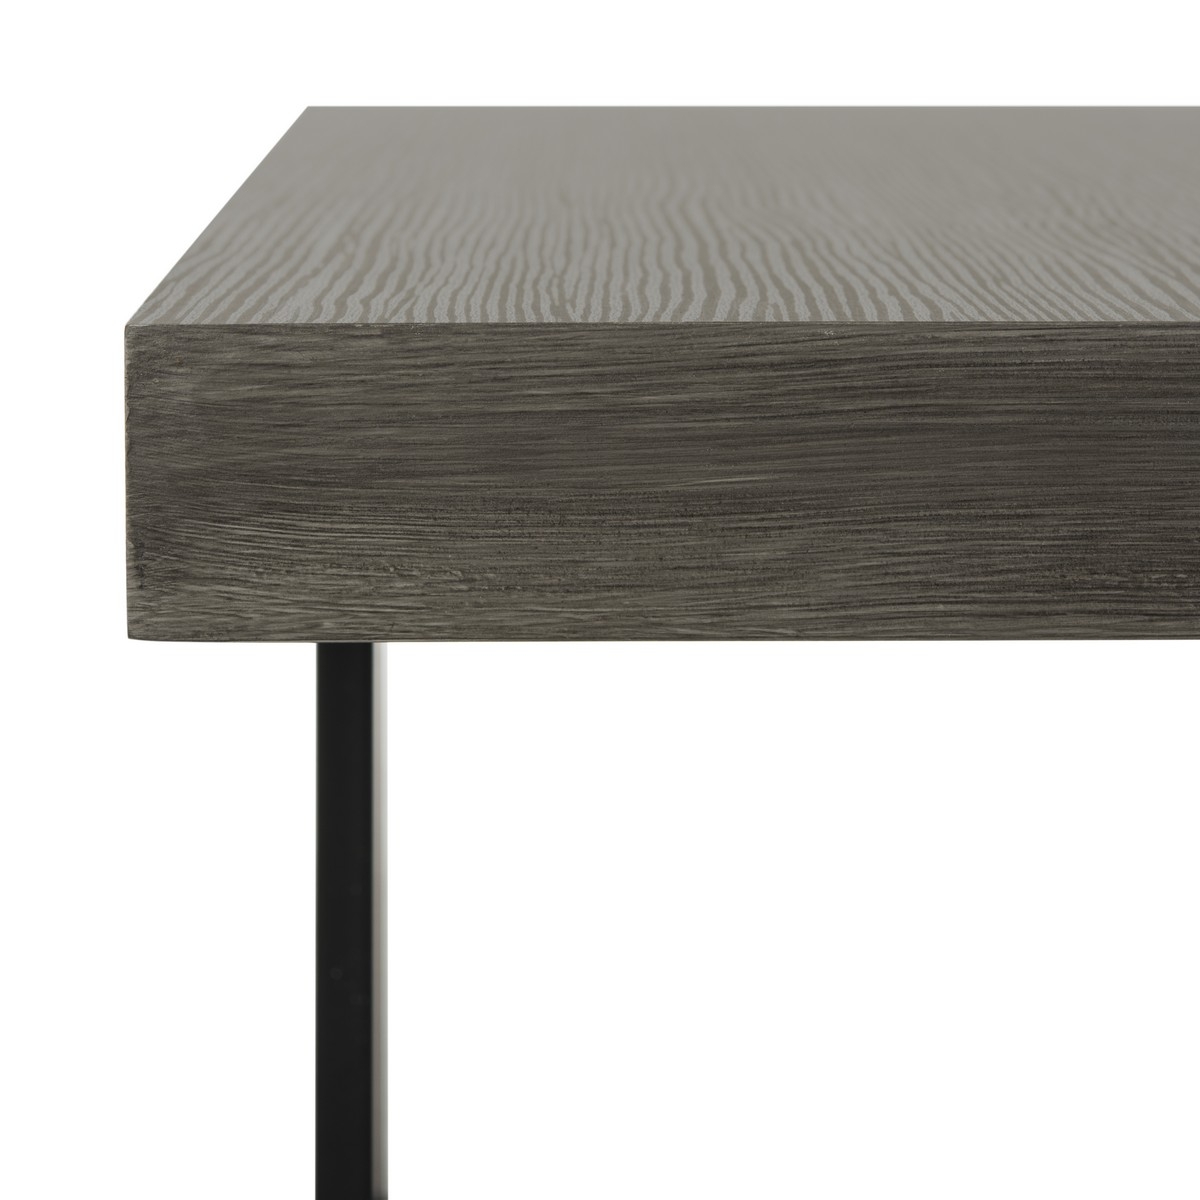 Amalya Modern Mid Century Wood Coffee Table - Dark Grey/Black - Safavieh - Image 3